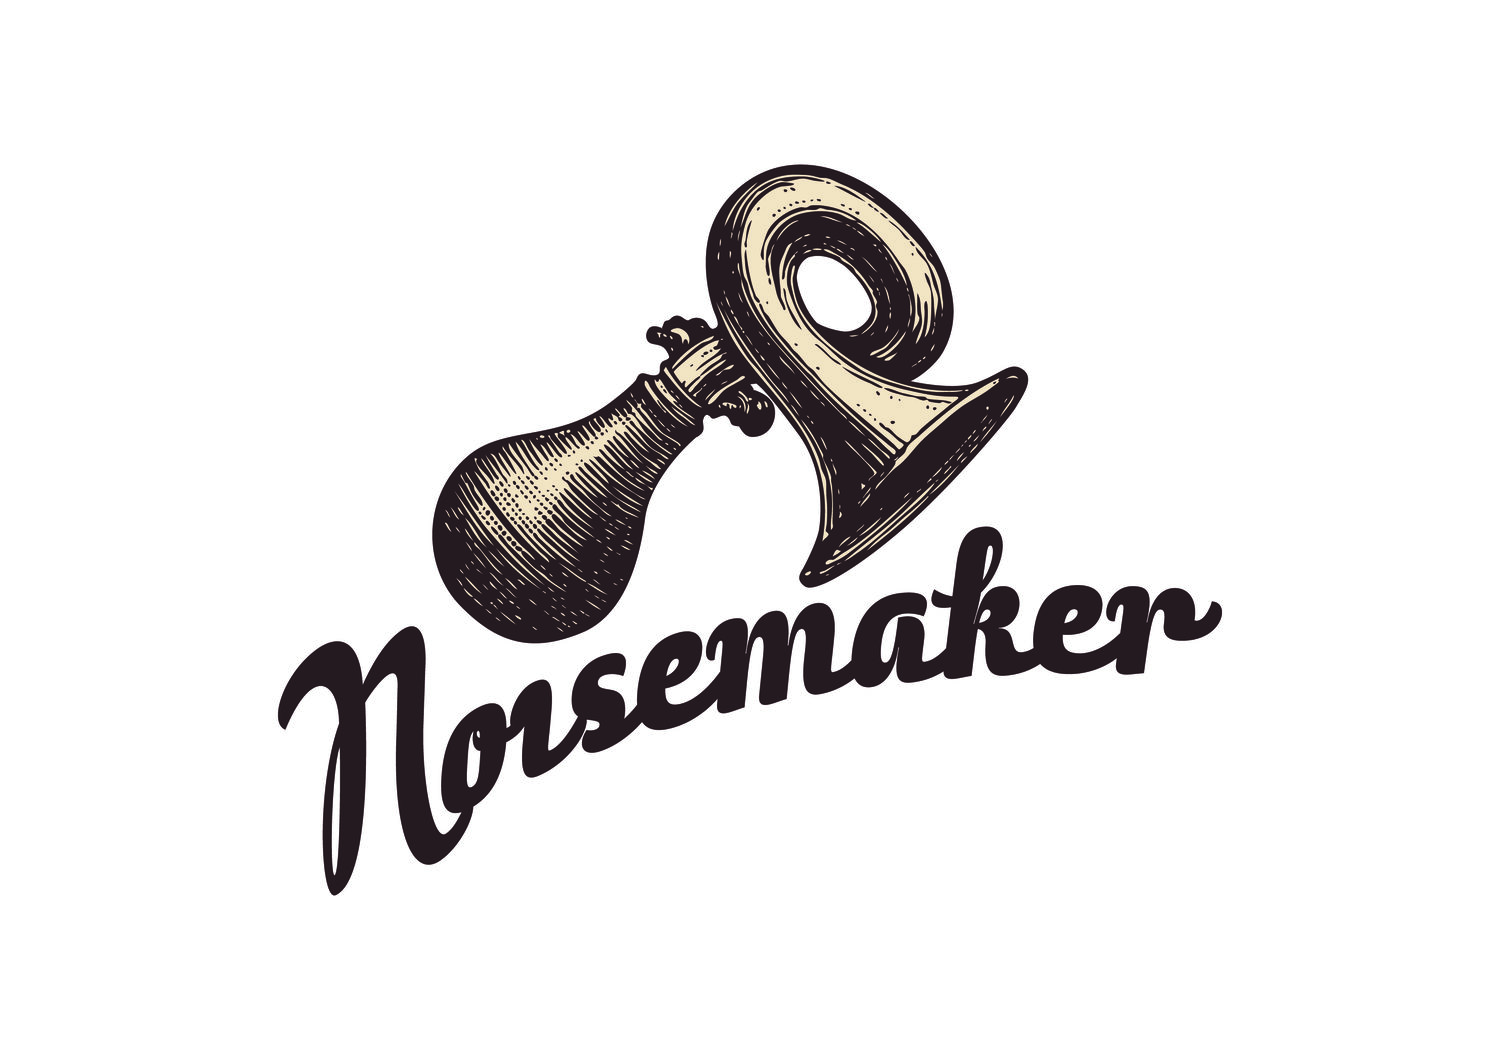 Noisemaker